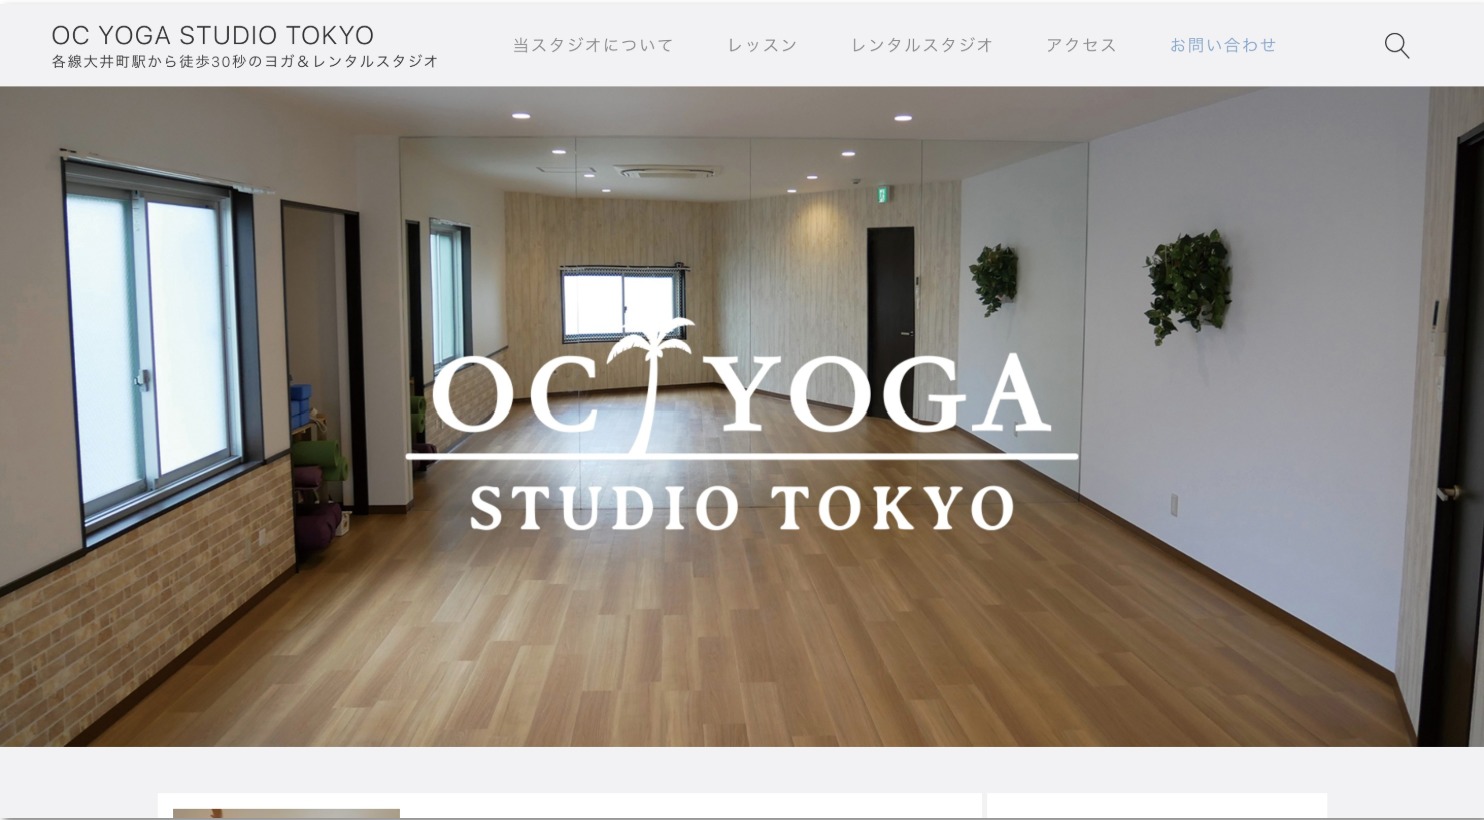 OC YOGA STUDIO TOKYO.の施設画像